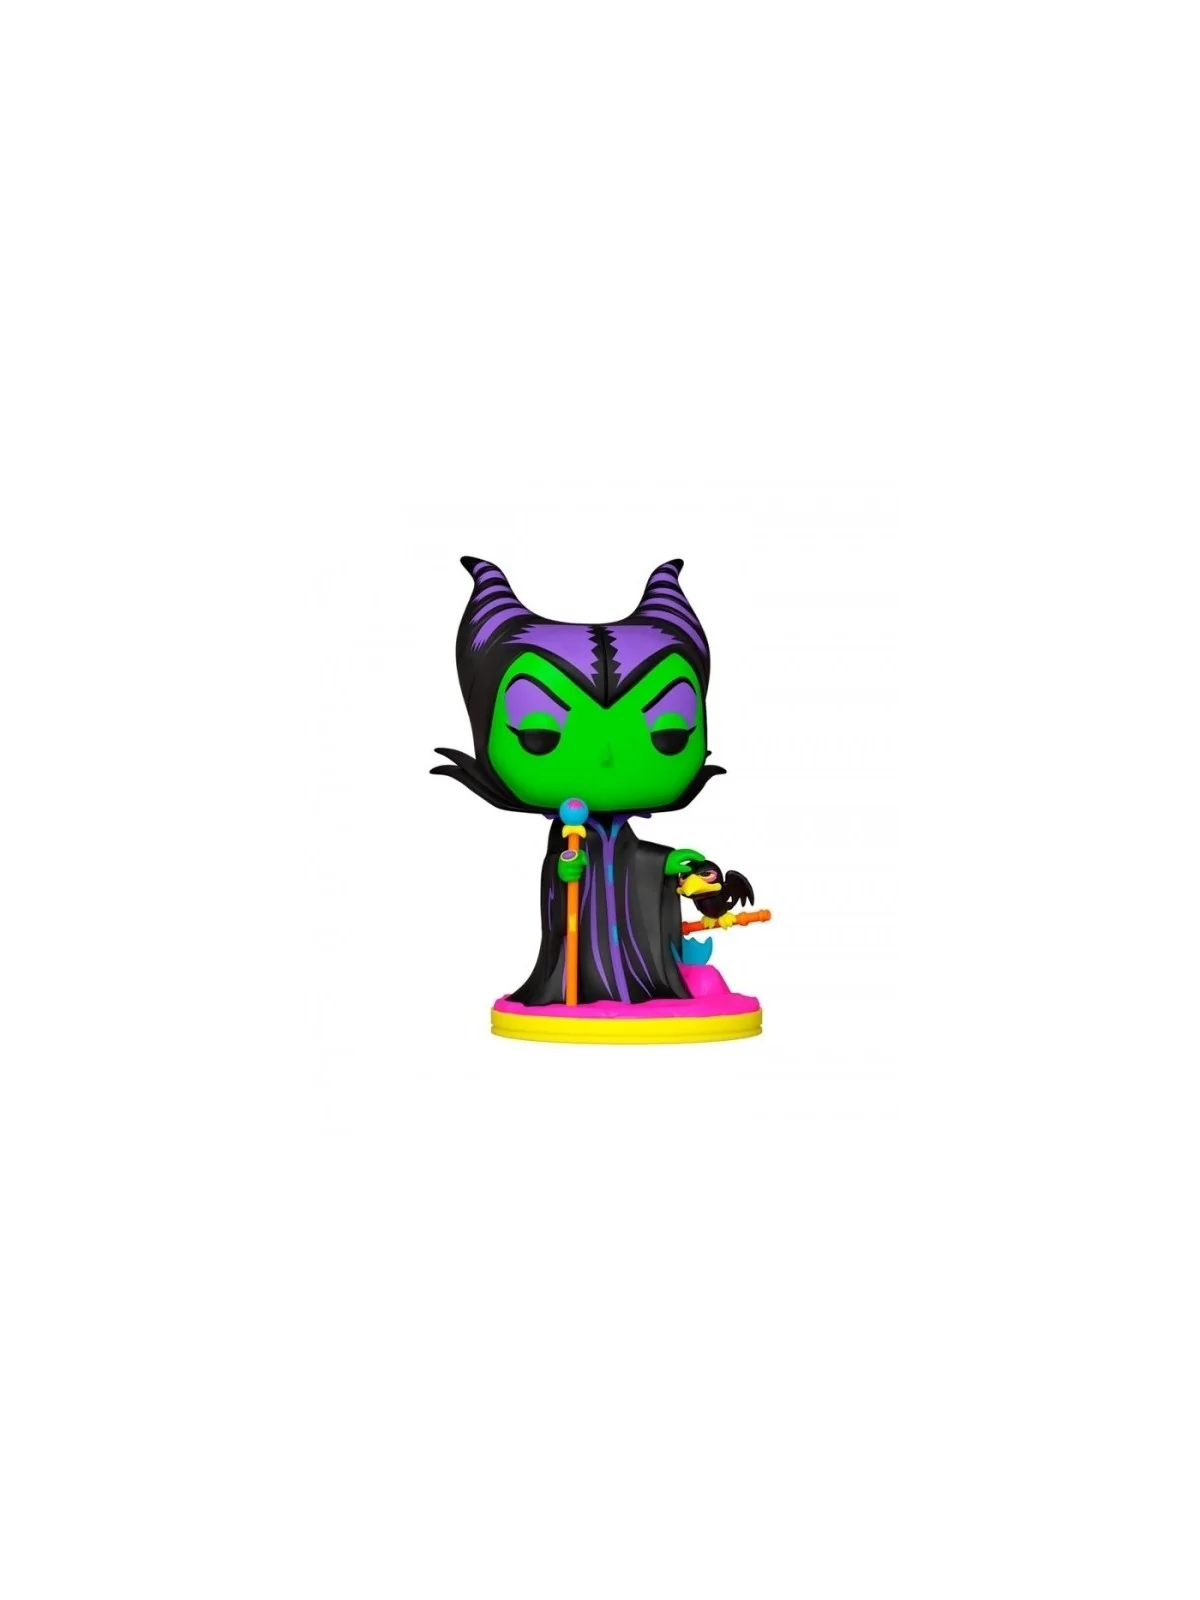 Comprar Funko POP! Disney Villains: Maleficent (Blacklight) (1082) bar